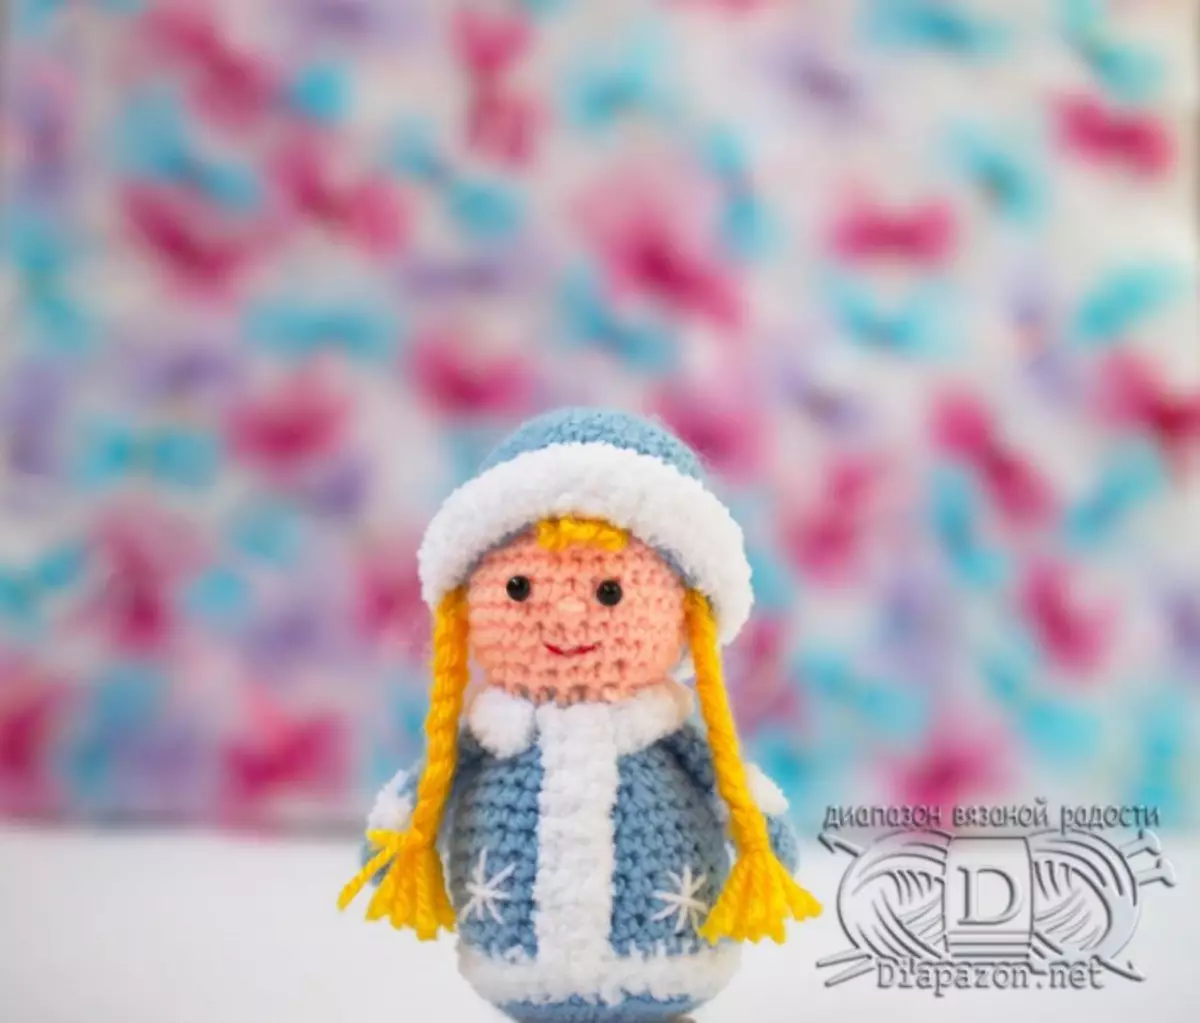 Crochet Snow Maiden: ថ្នាក់មេជាមួយគ្រោងការណ៍និងការពិពណ៌នា